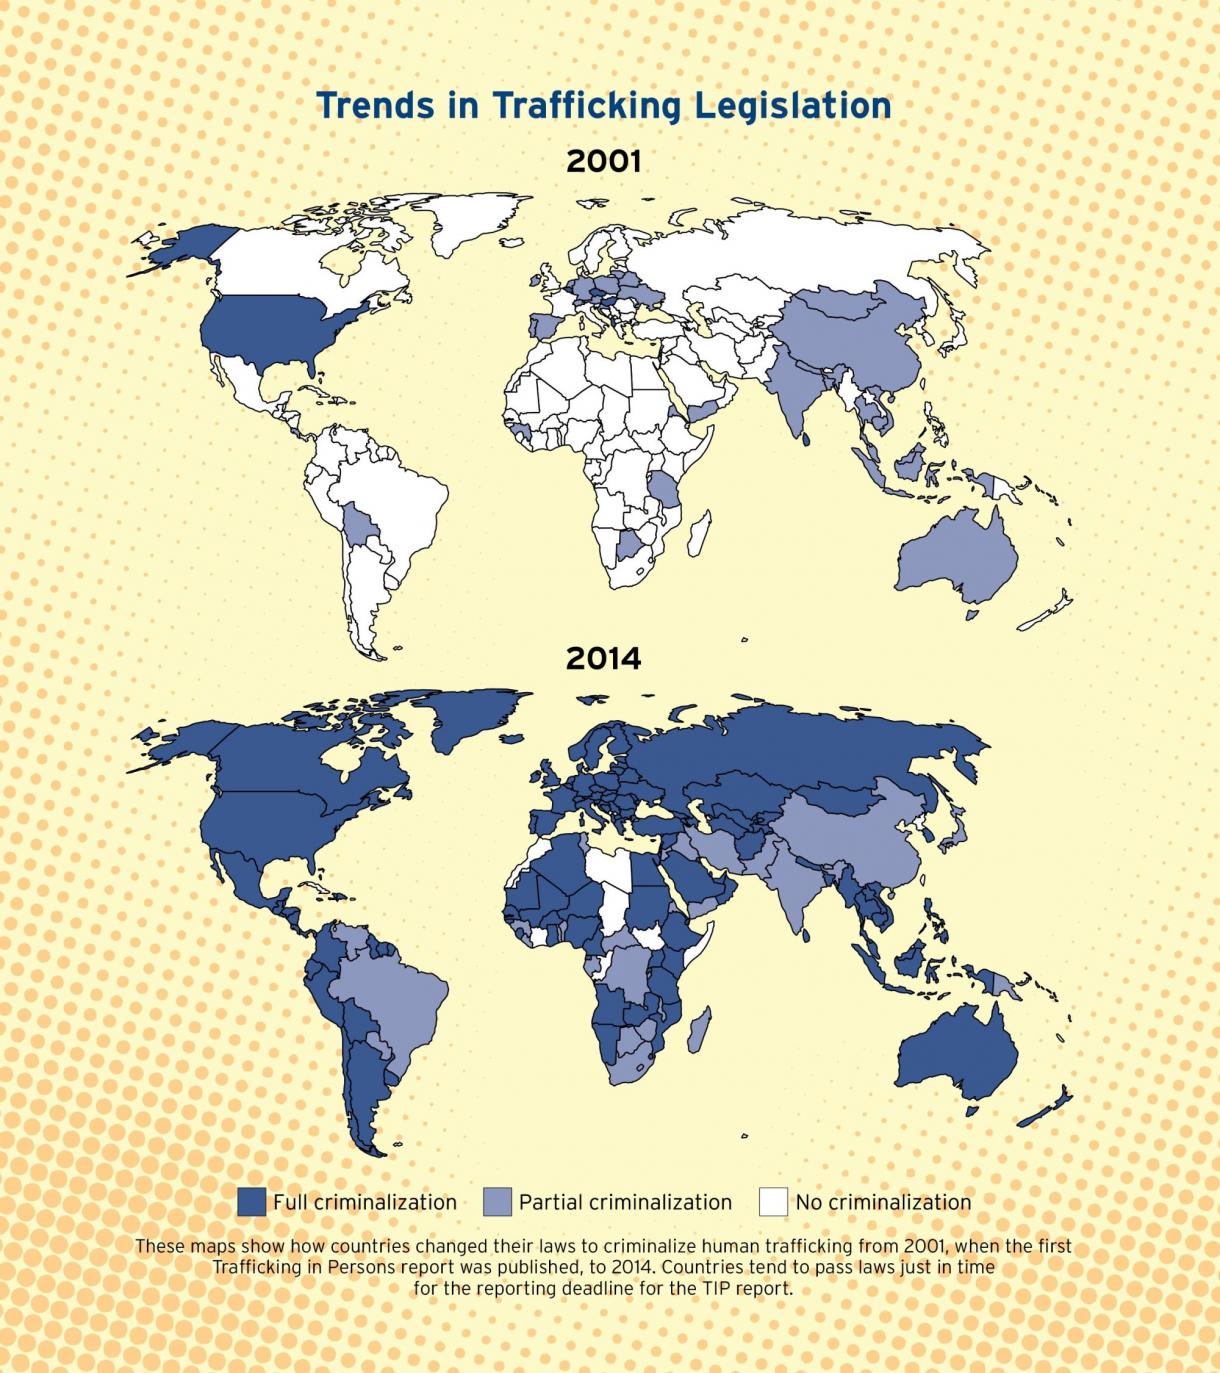 Trends in Trafficking Legislation graphic